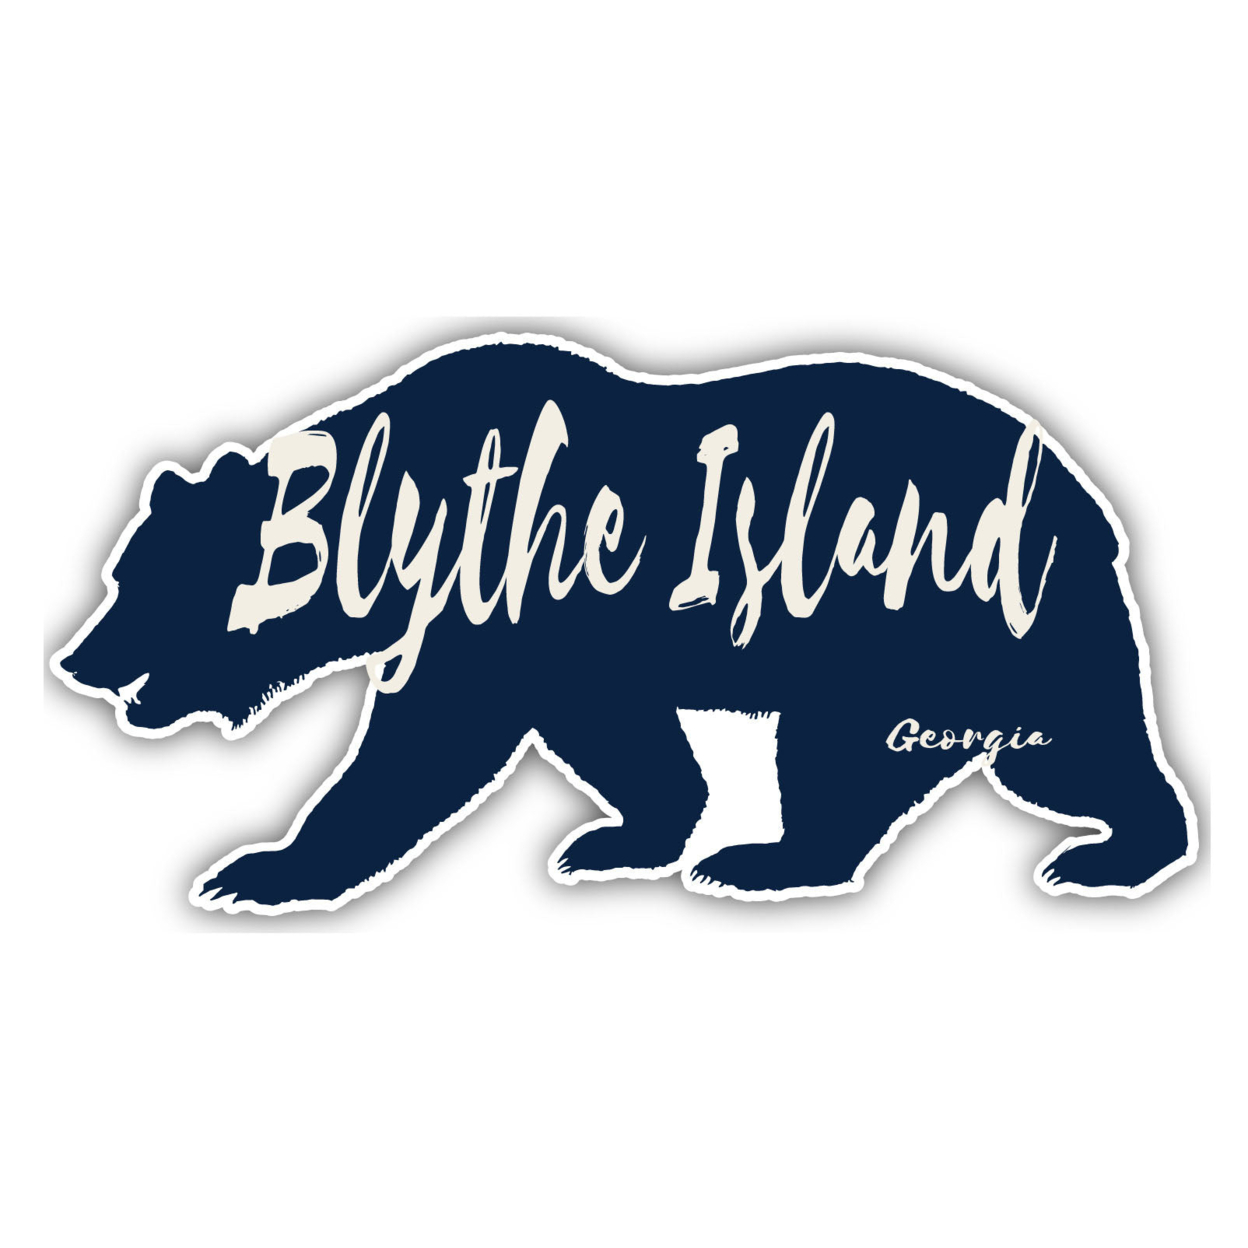 Blythe Island Georgia Souvenir Decorative Stickers (Choose Theme And Size) - Single Unit, 10-Inch, Tent